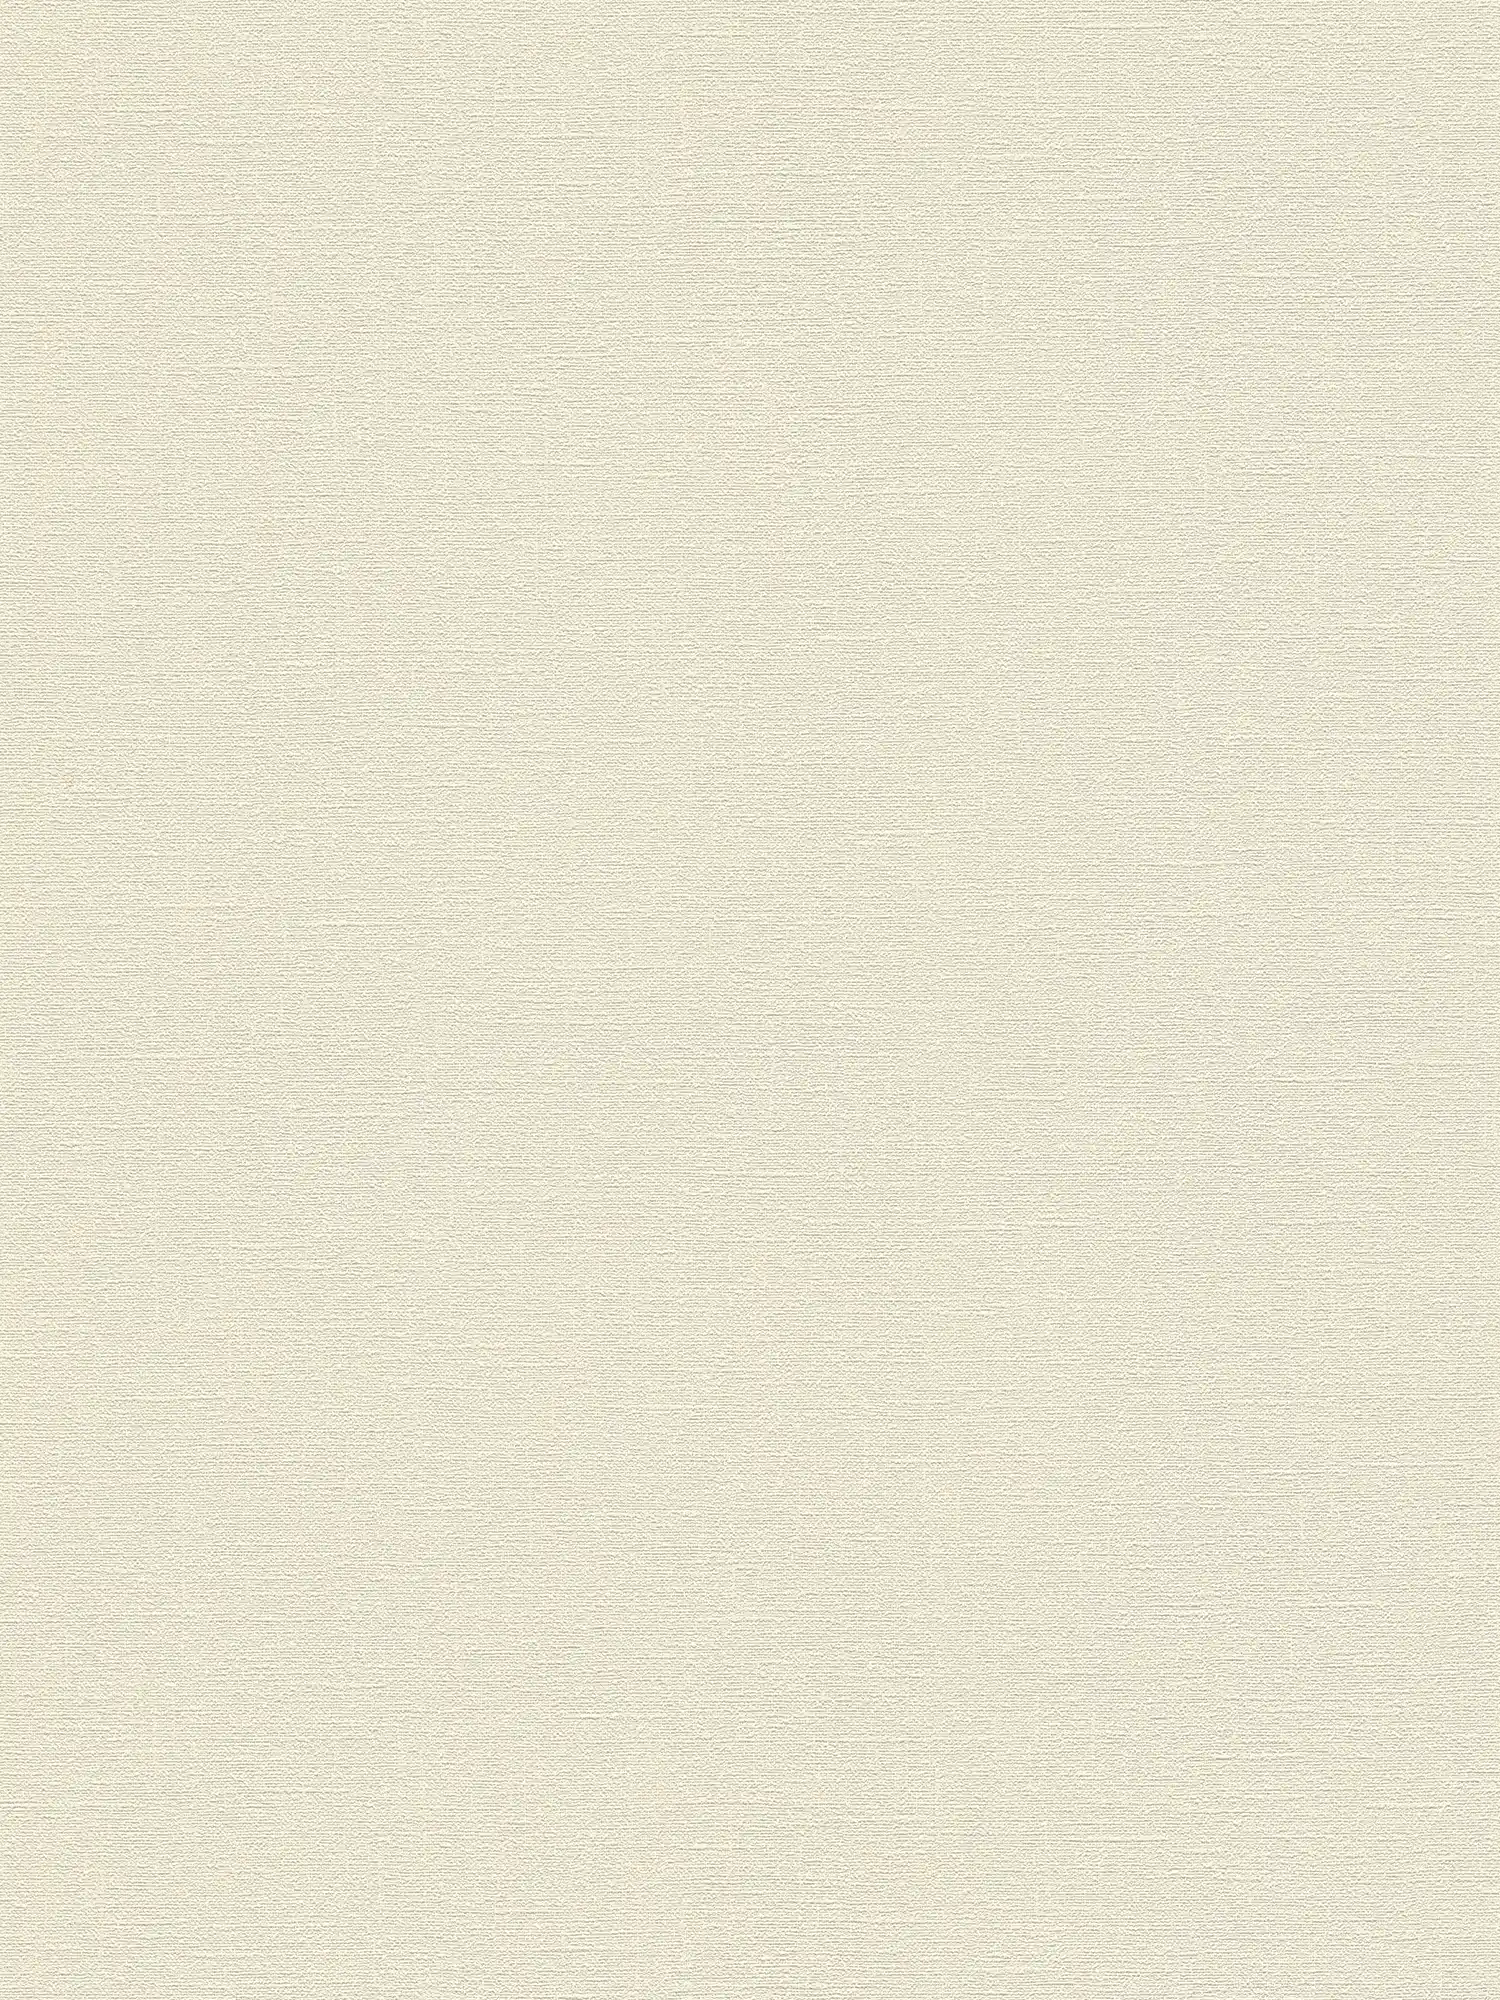 PVC-free plain non-woven wallpaper with fine structure - white
